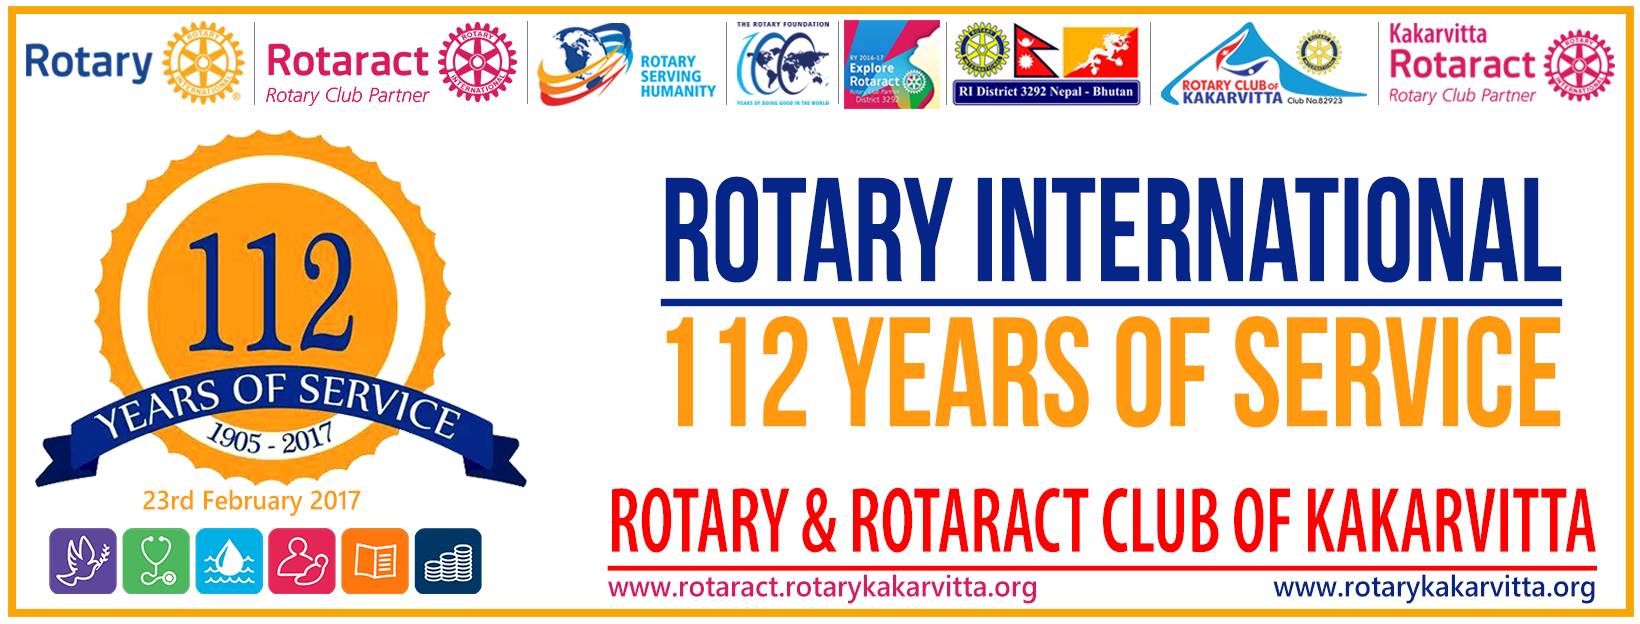 rotary-international-112-years-of-service